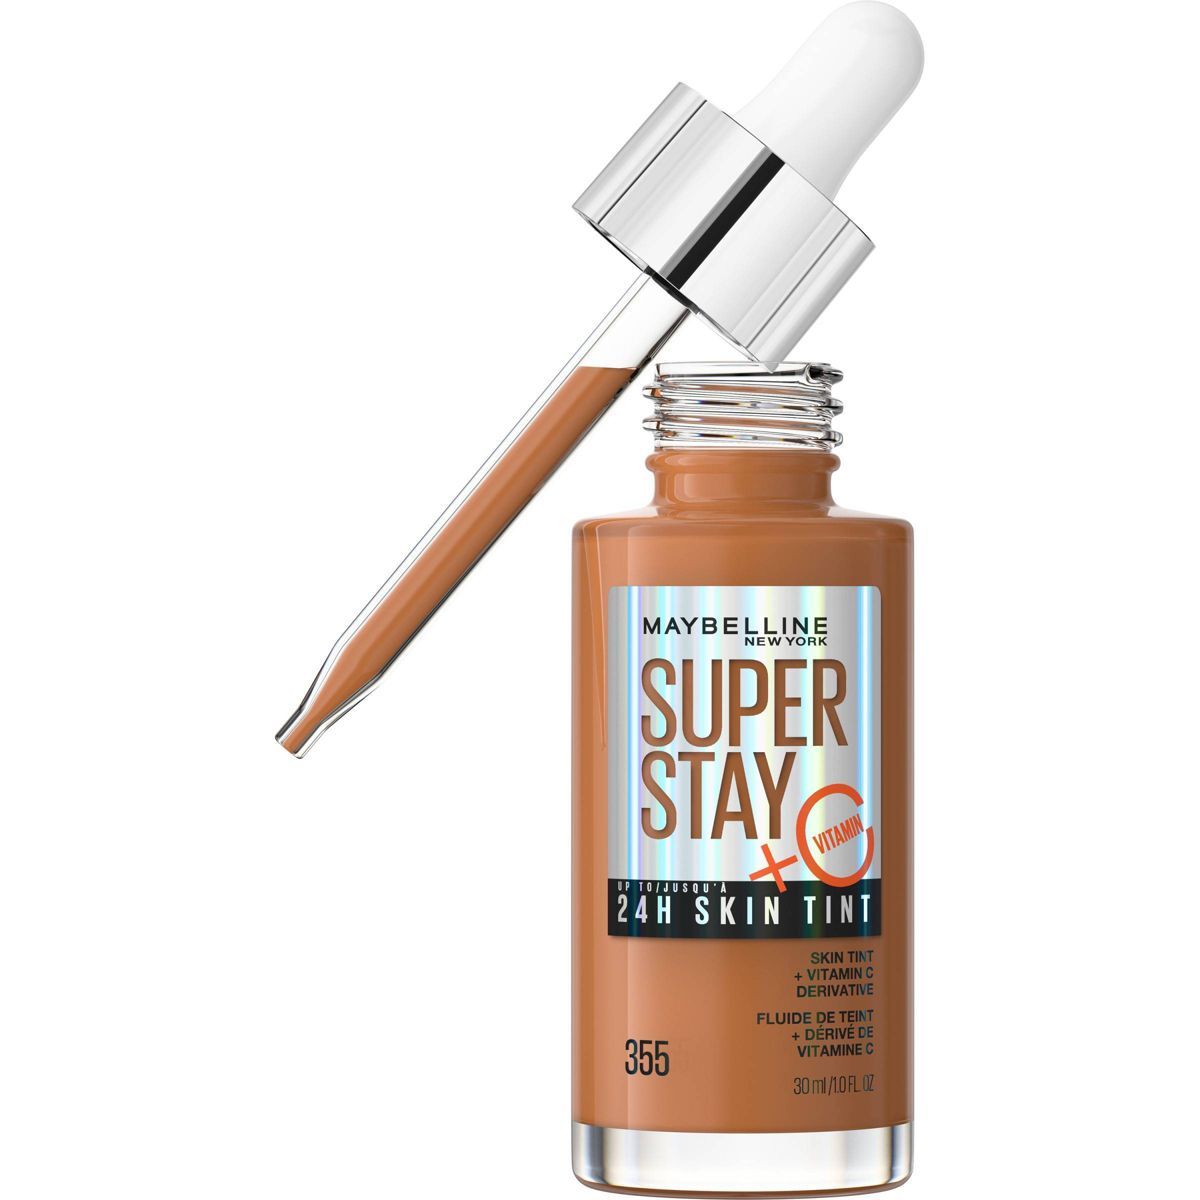 Maybelline Super Stay 24HR Skin Tint Foundation Serum with Vitamin C - 1 fl oz | Target